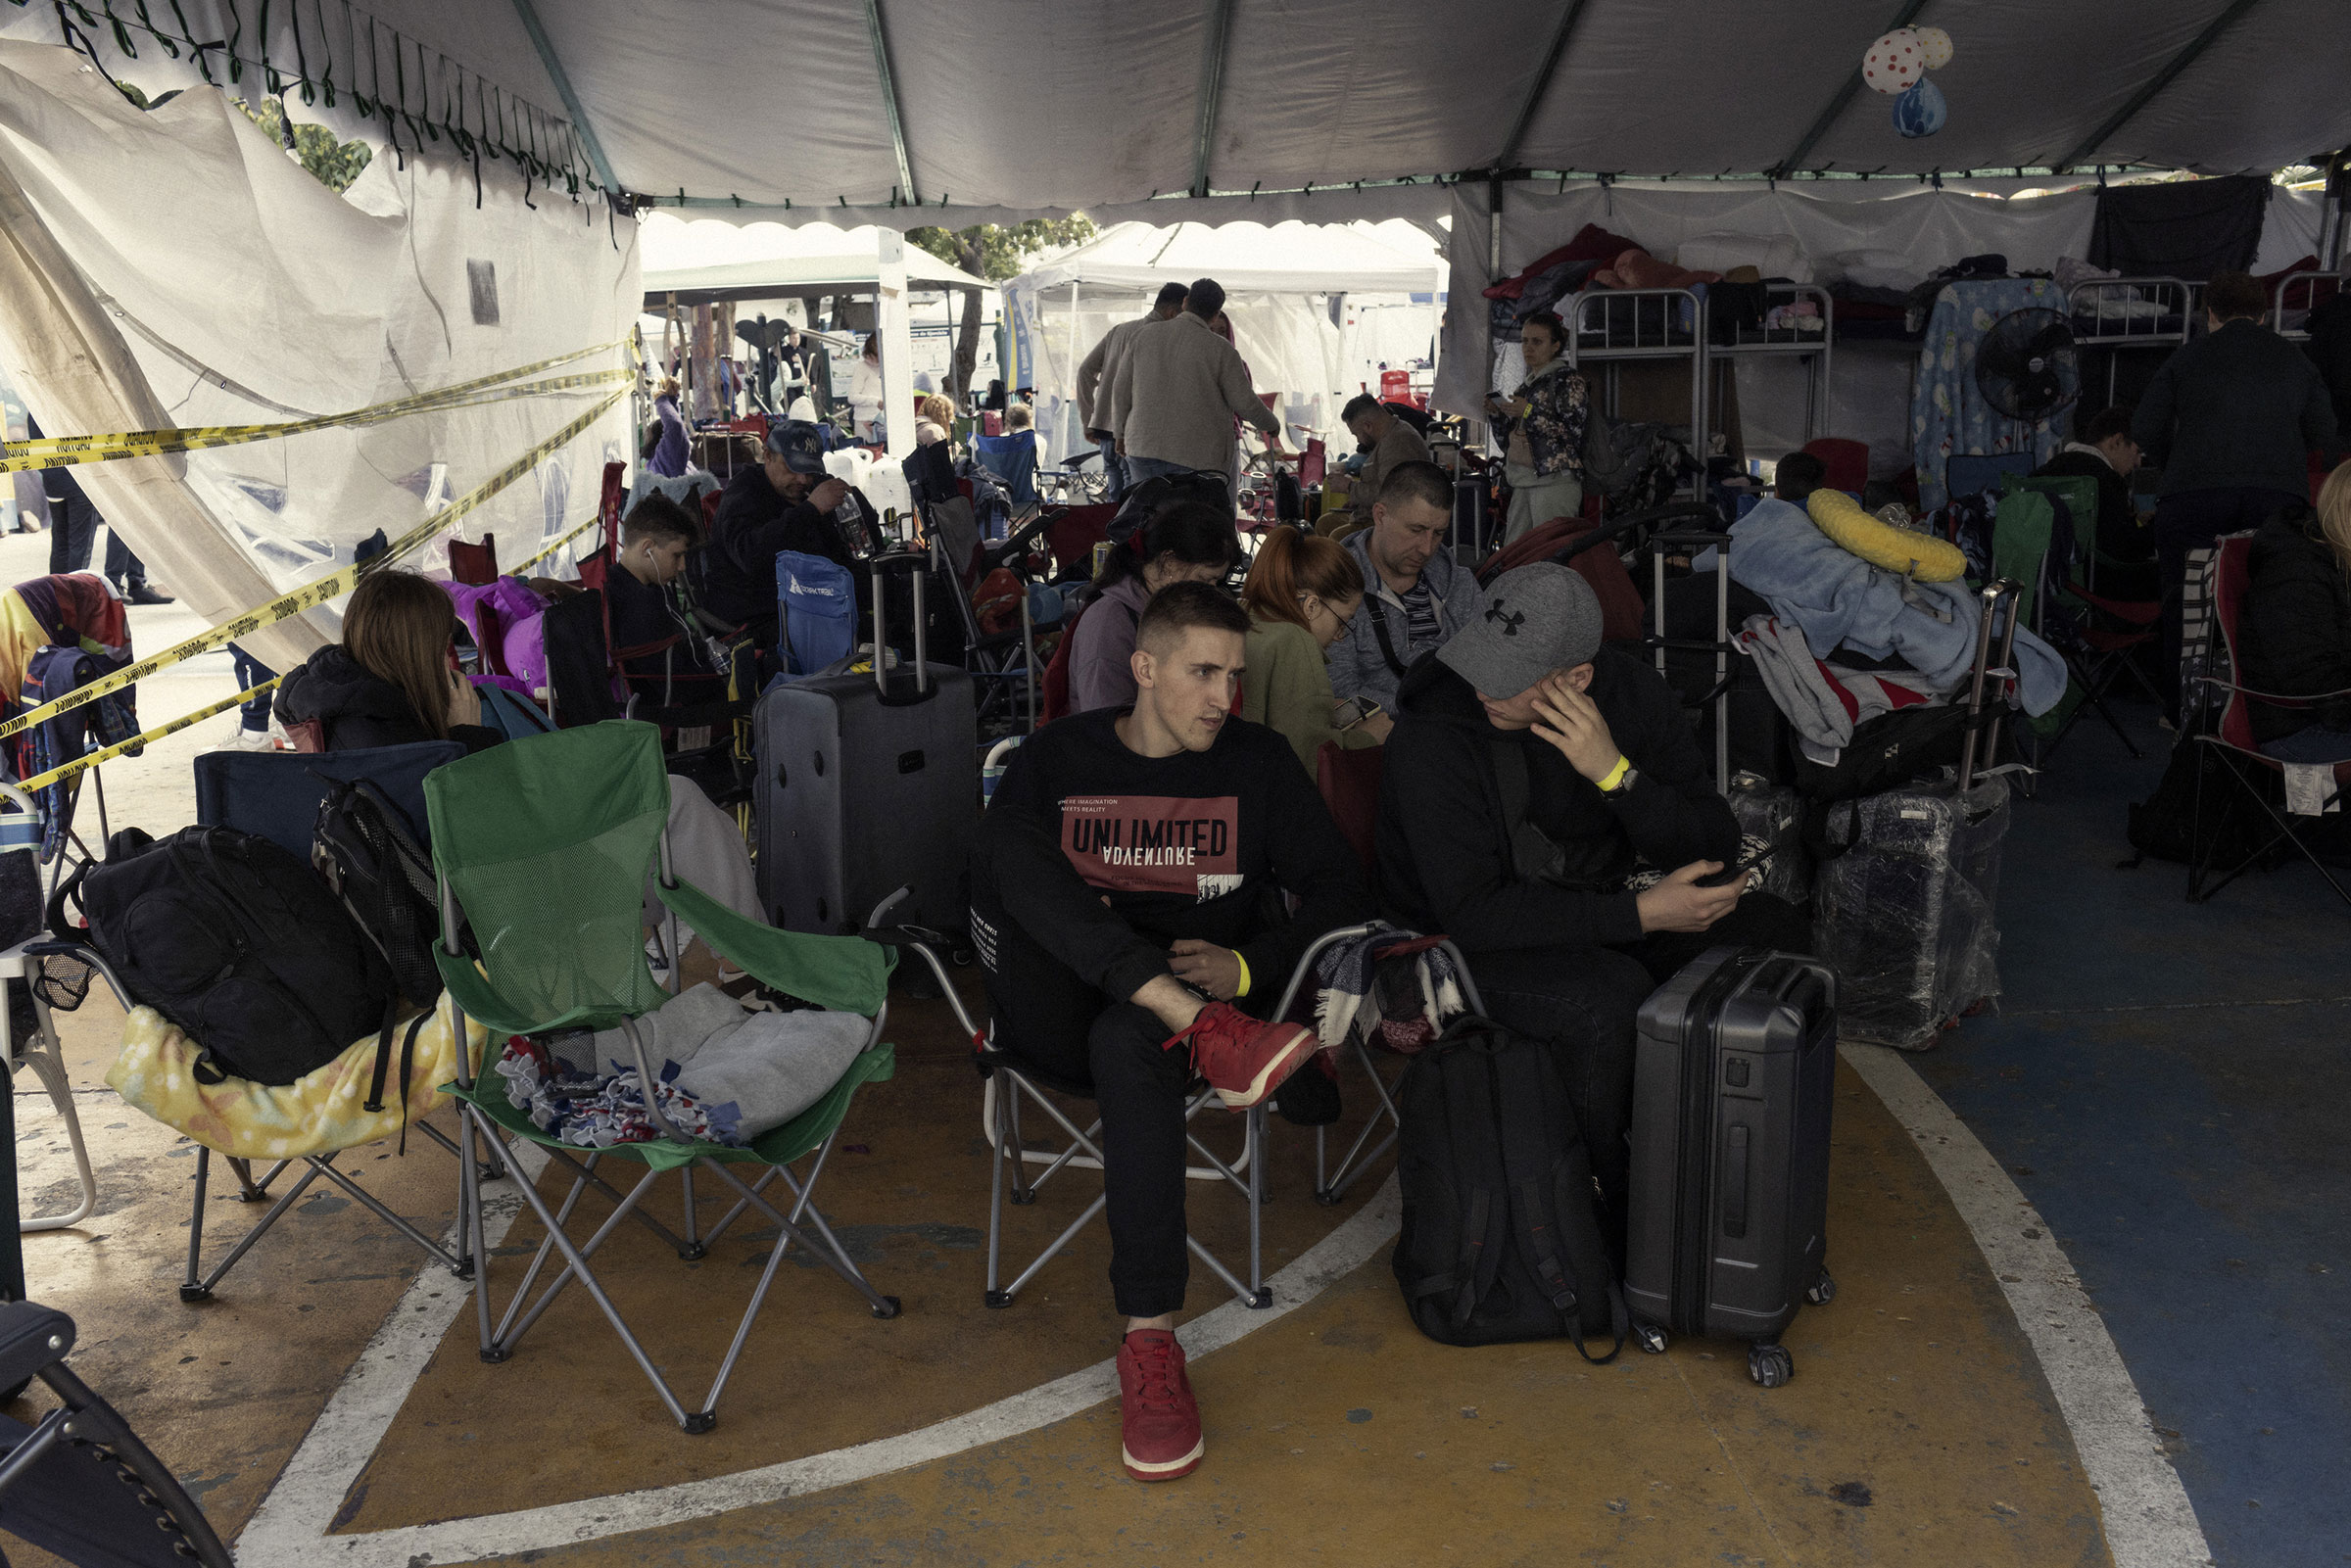 New Program Aims To Minimize Ukraine Refugees Seeking Asylum At U.S. And Mexico Border